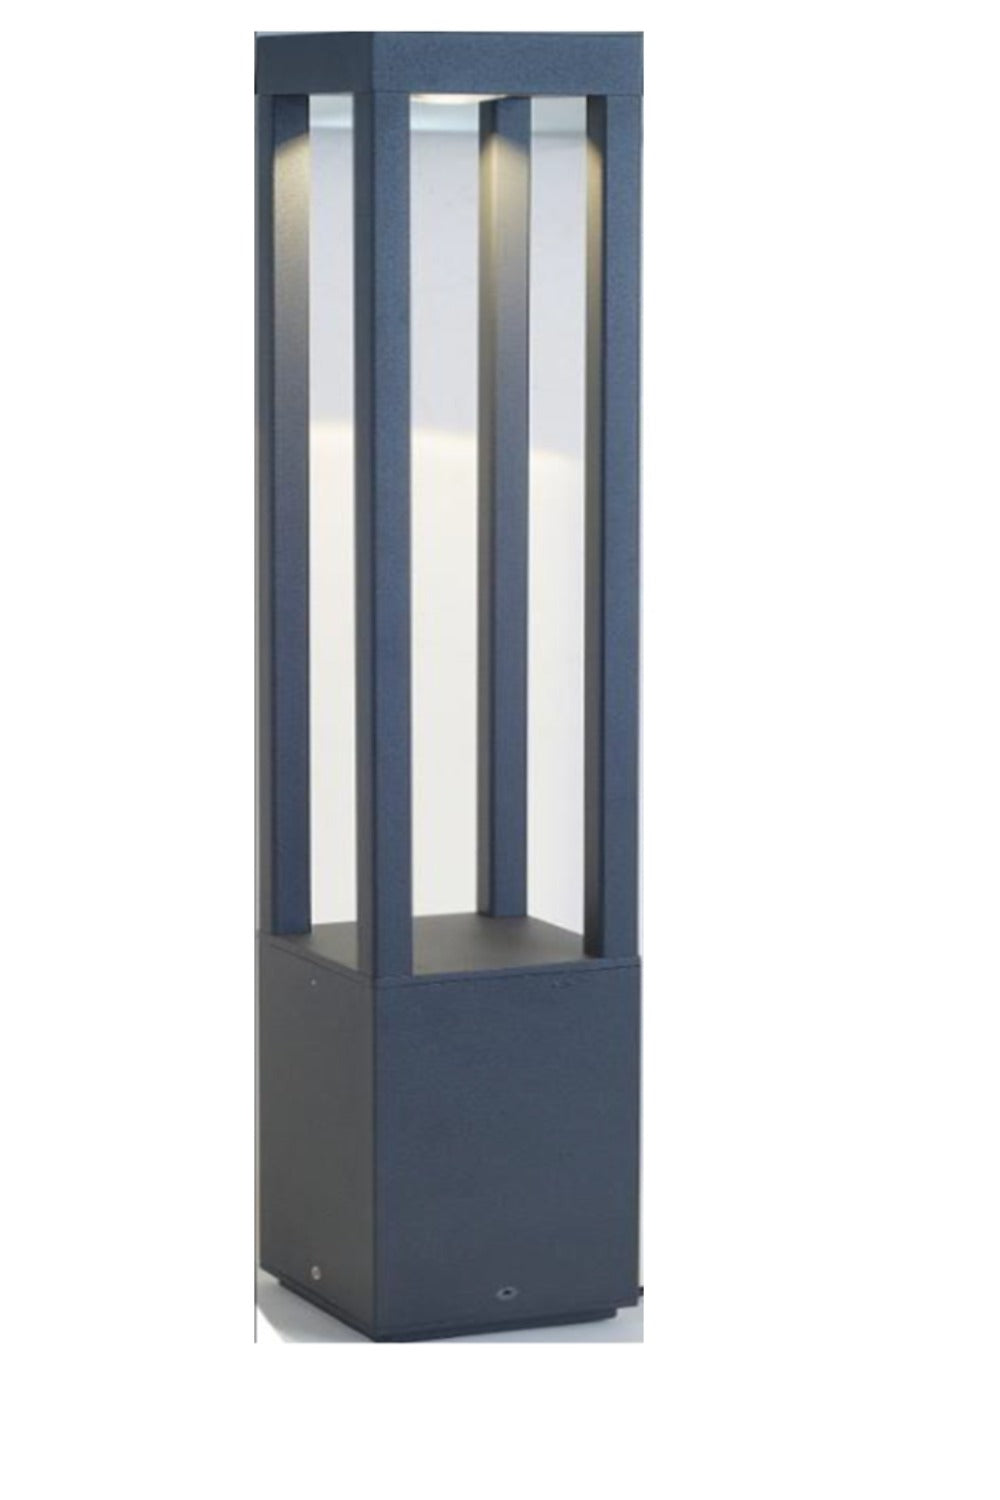 DESS Pole Light - Model: GLHI9453